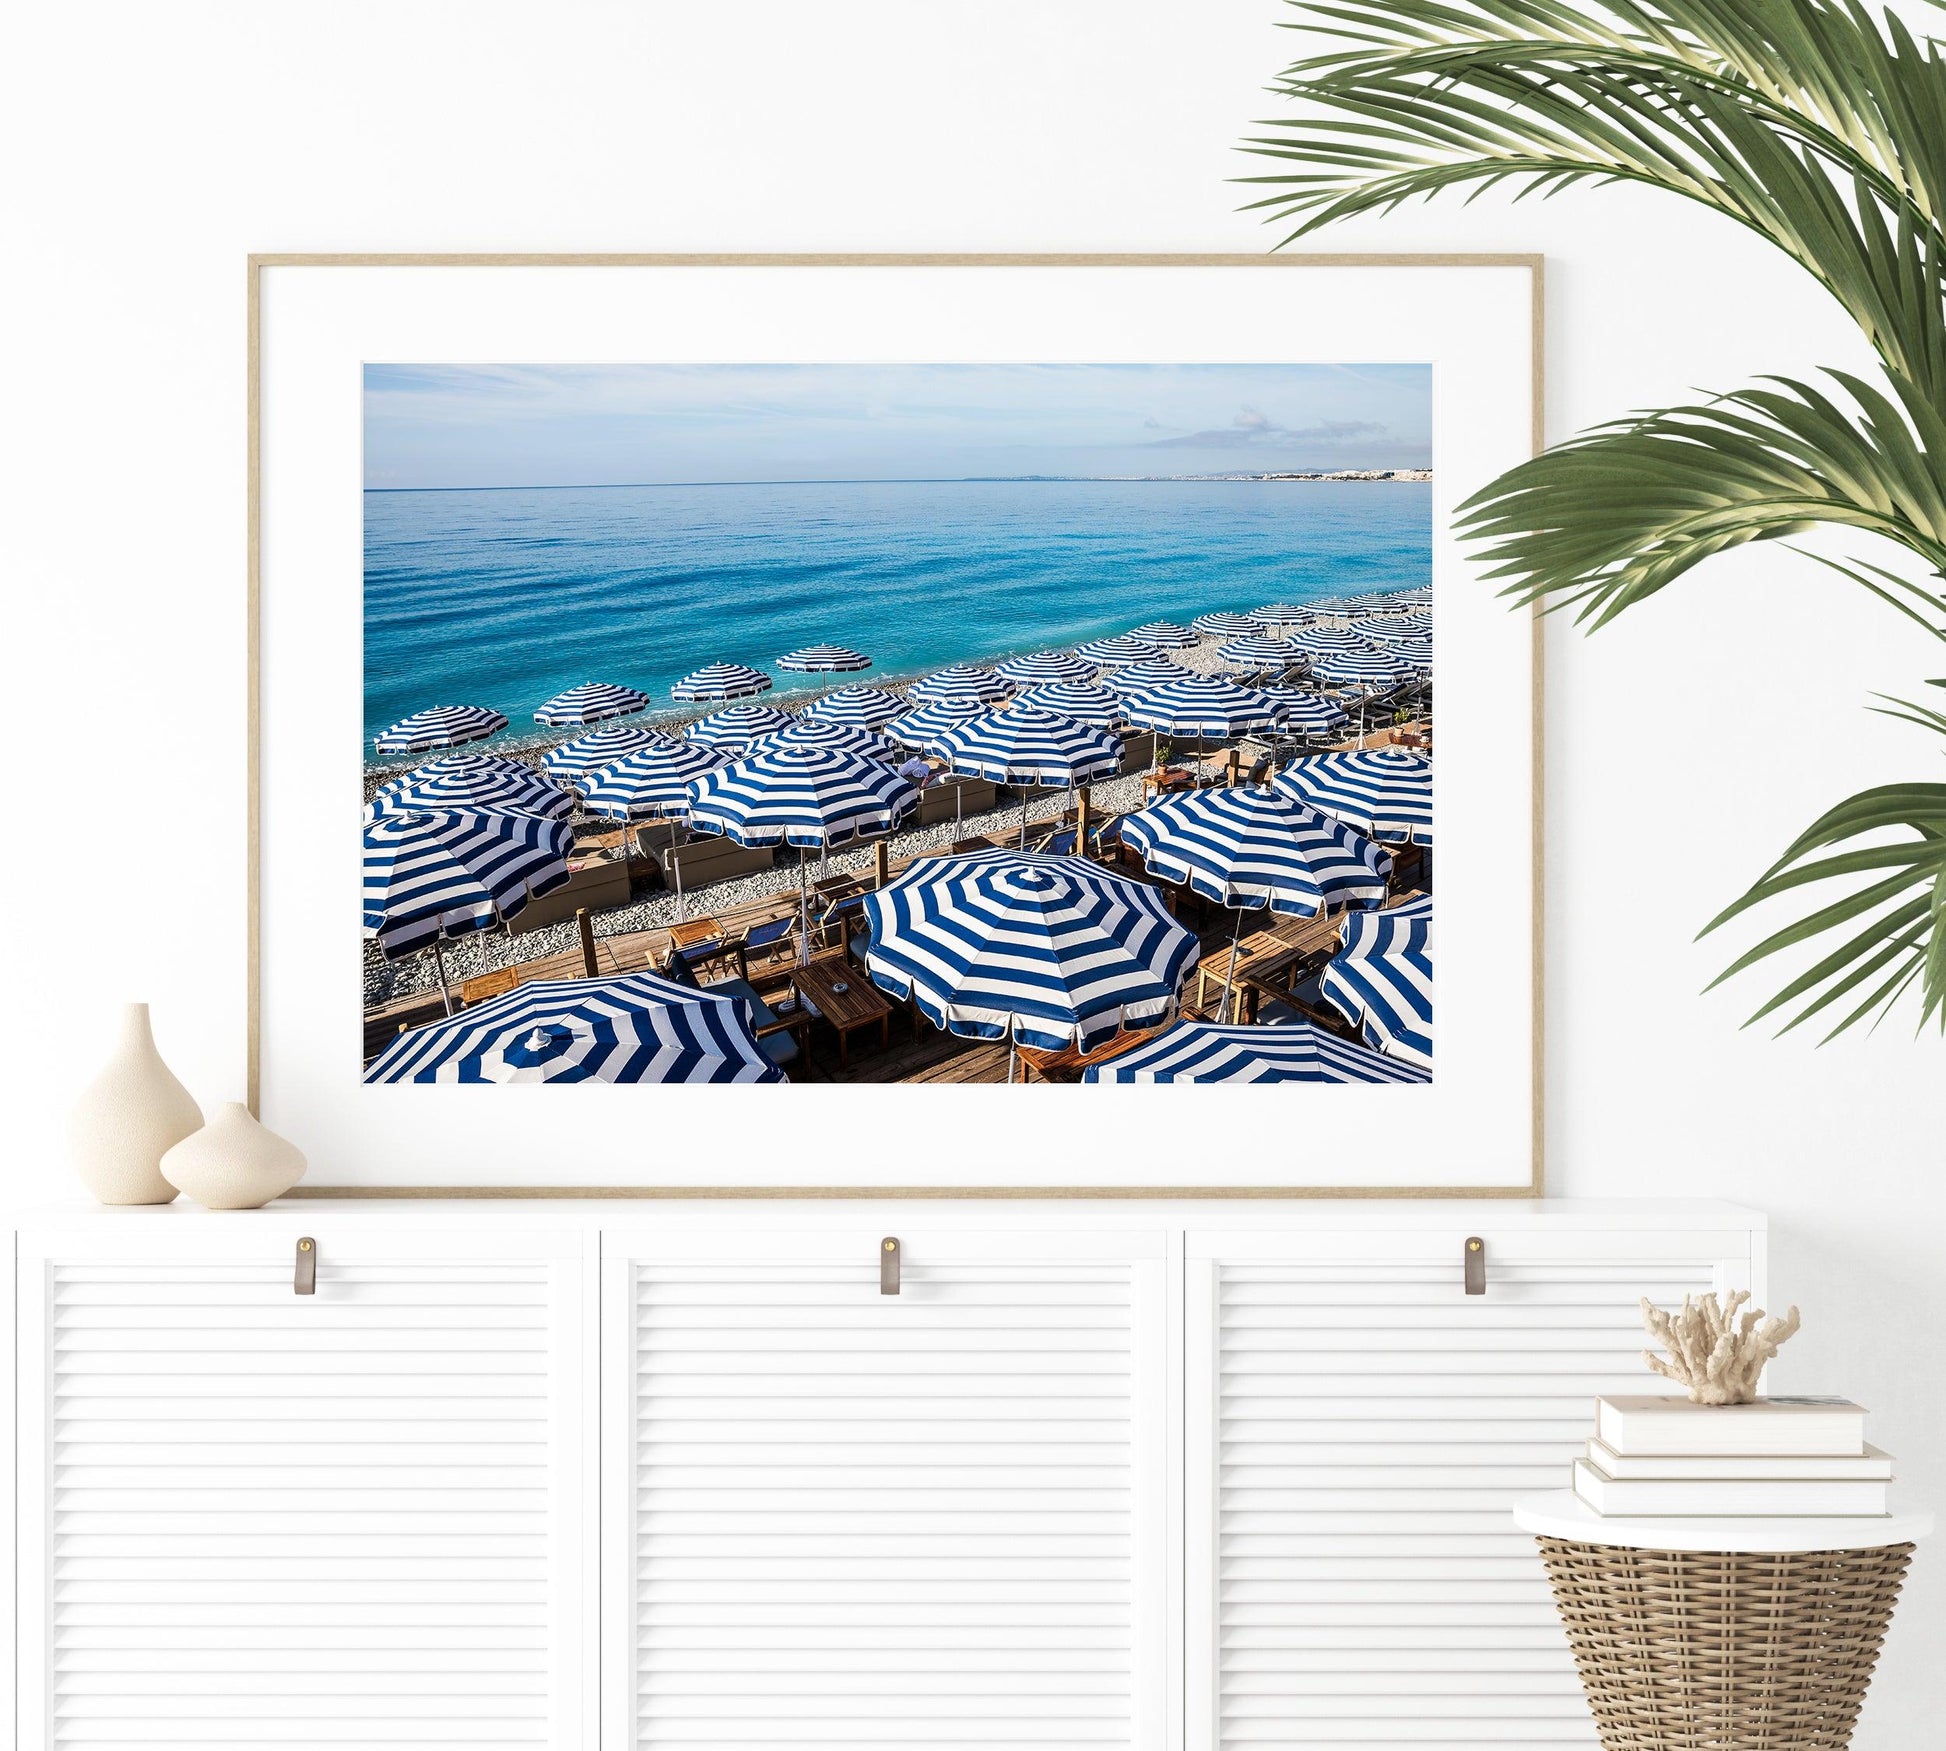 Cote d'Azur Beach Club Umbrellas III | French Riviera Photography Print - Departures Print Shop